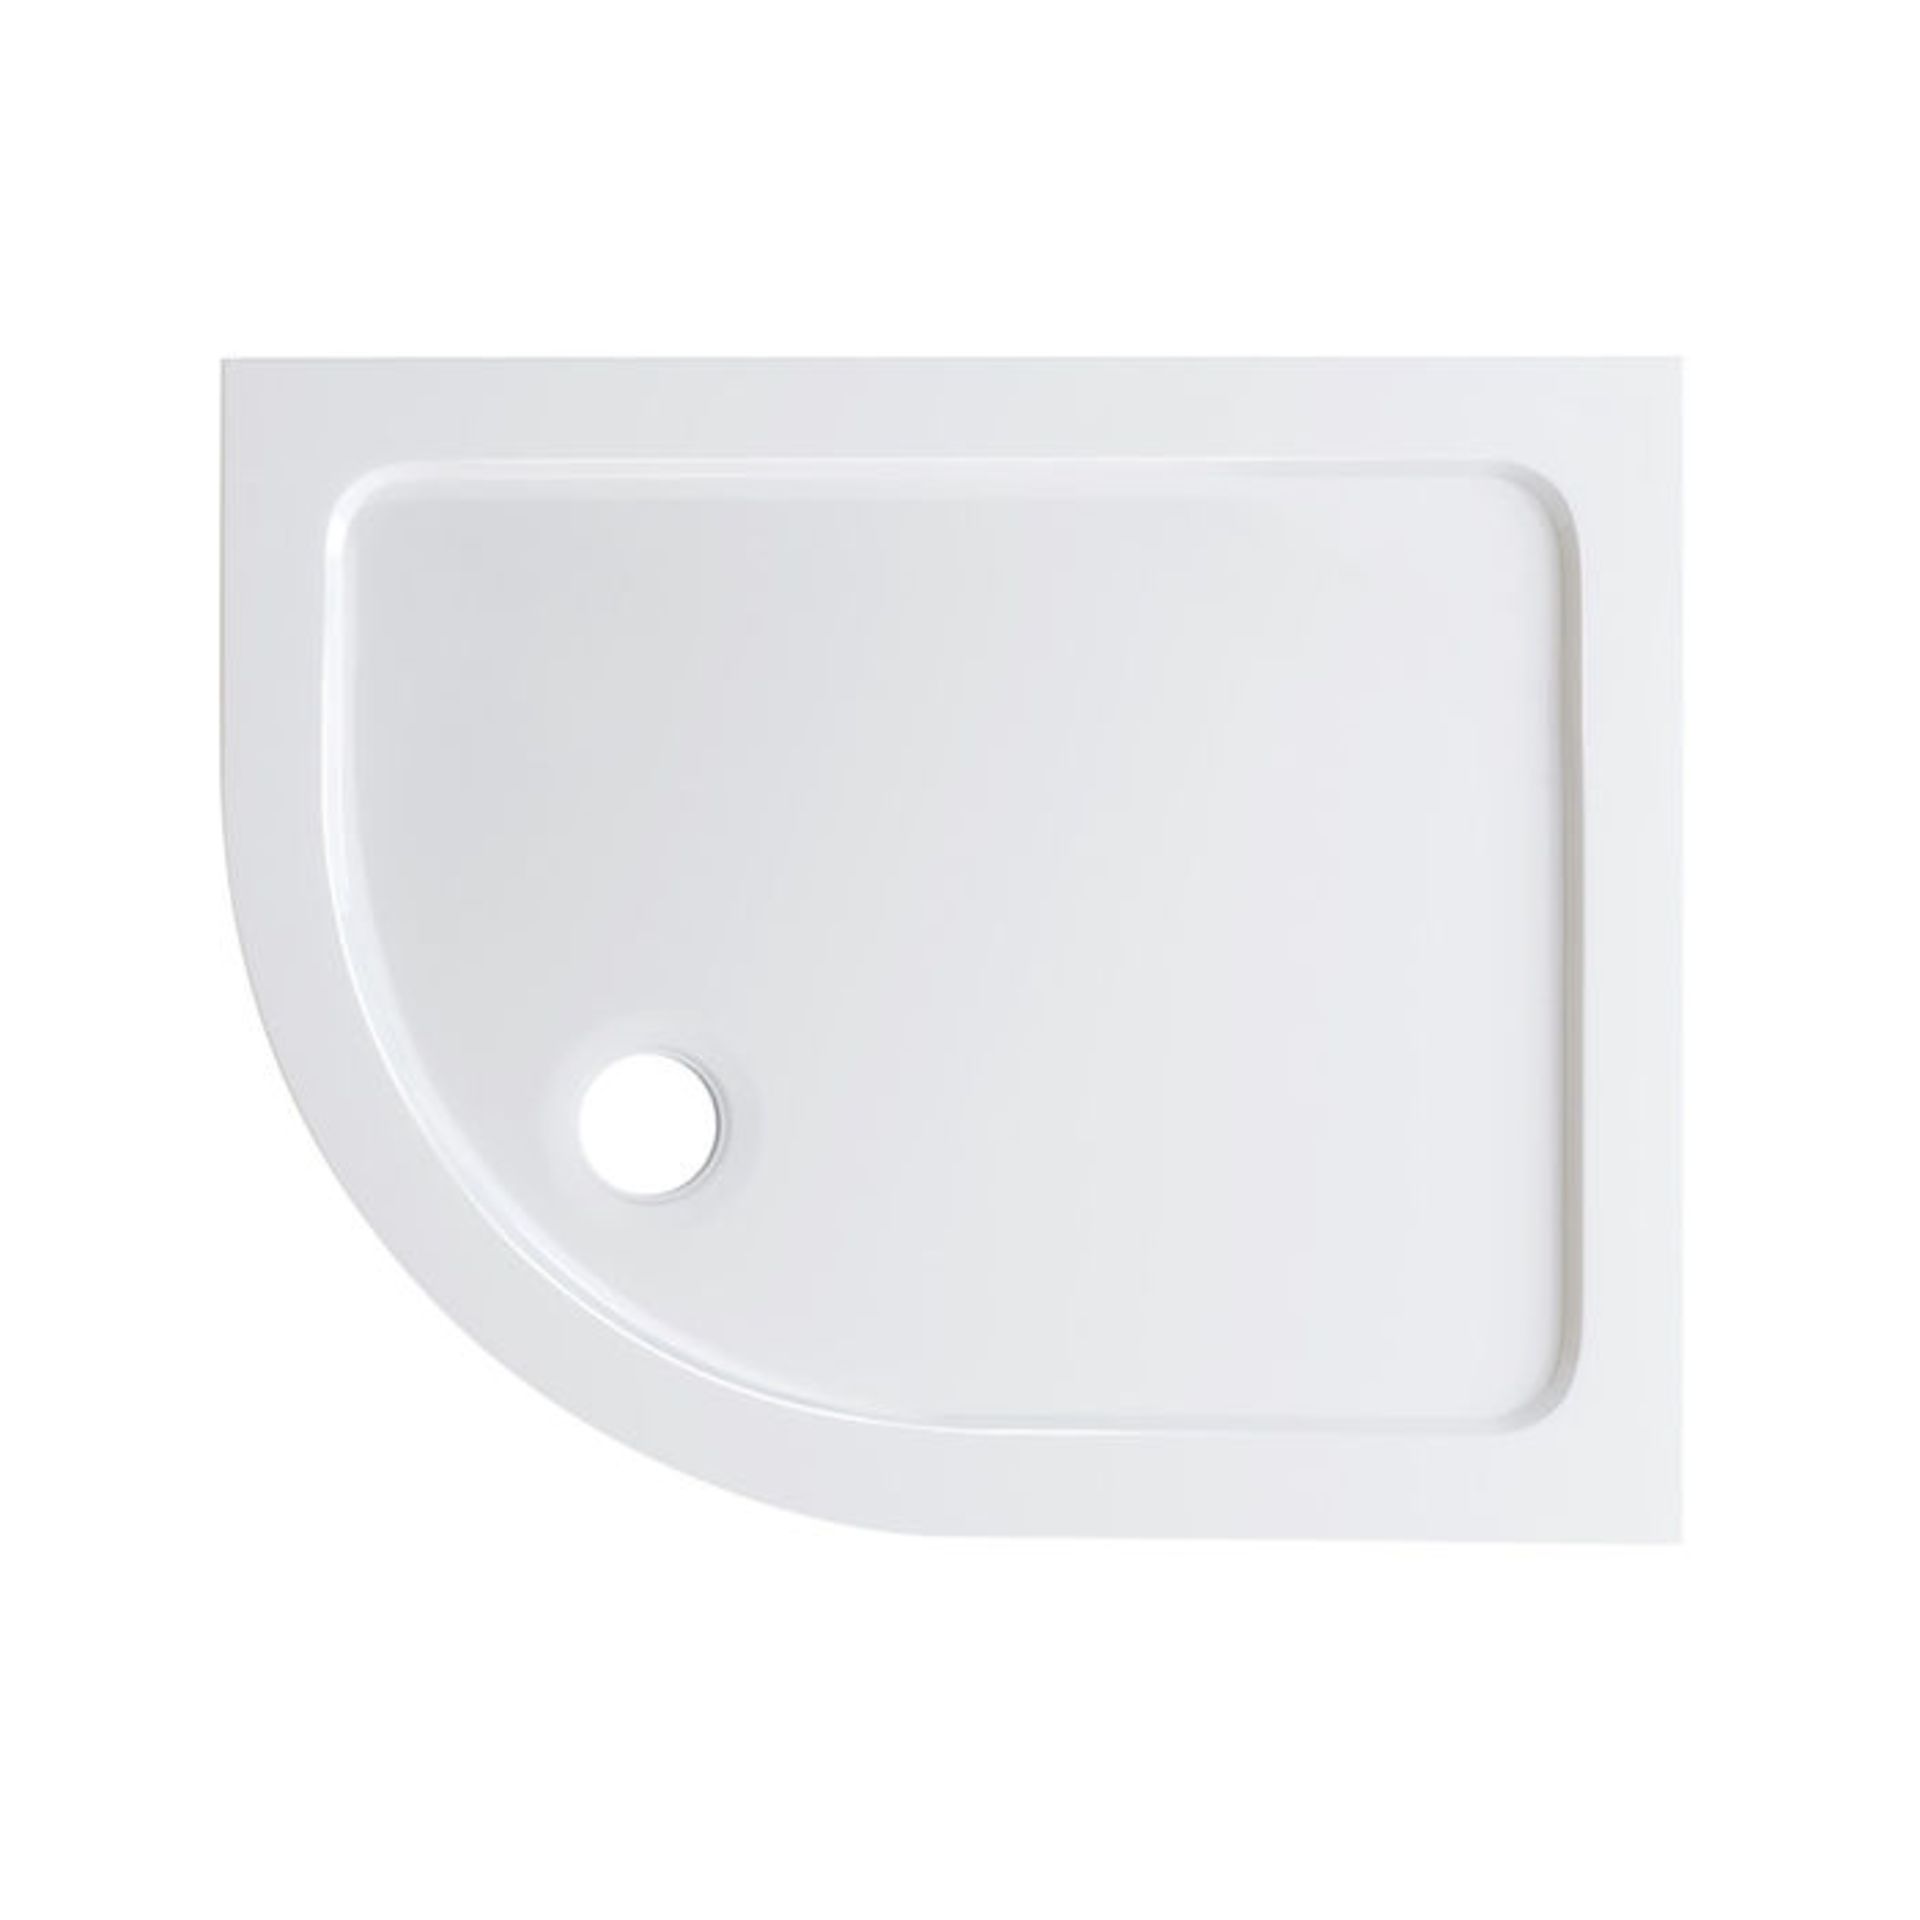 (AL241) 1000x800mm Offset Quadrant Ultra Slim Stone Shower Tray - Left. Low profile ultra slim